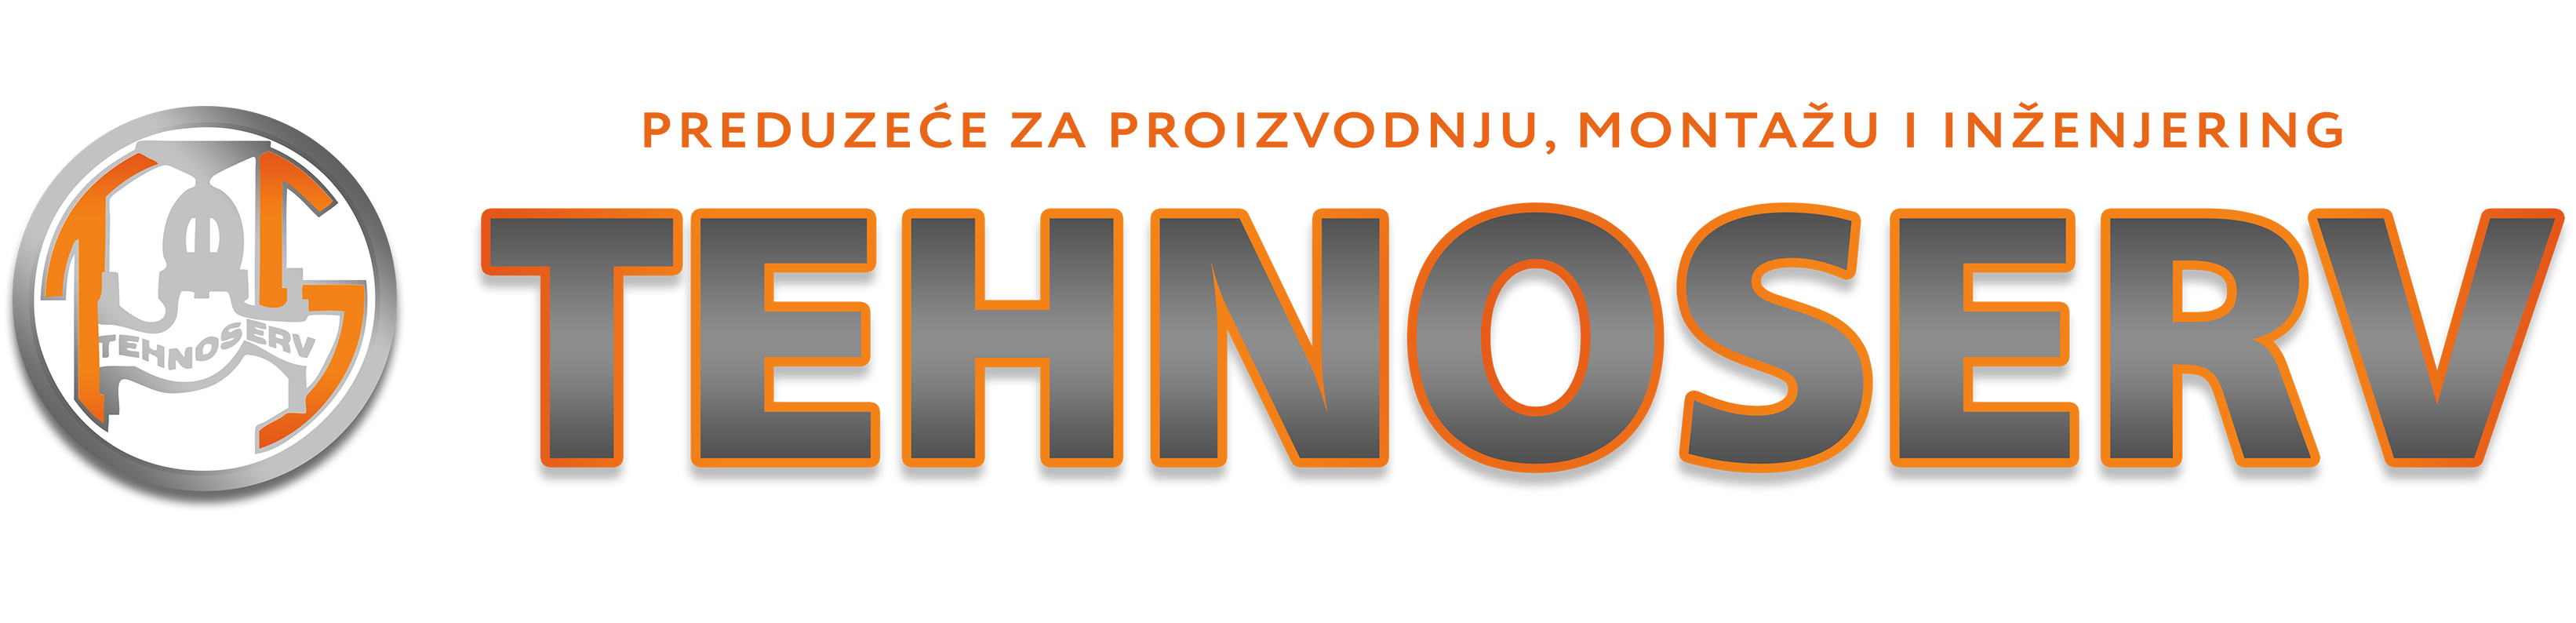 https://tehnoserv.com/wp-content/uploads/2020/11/cropped-logo-2-1.png